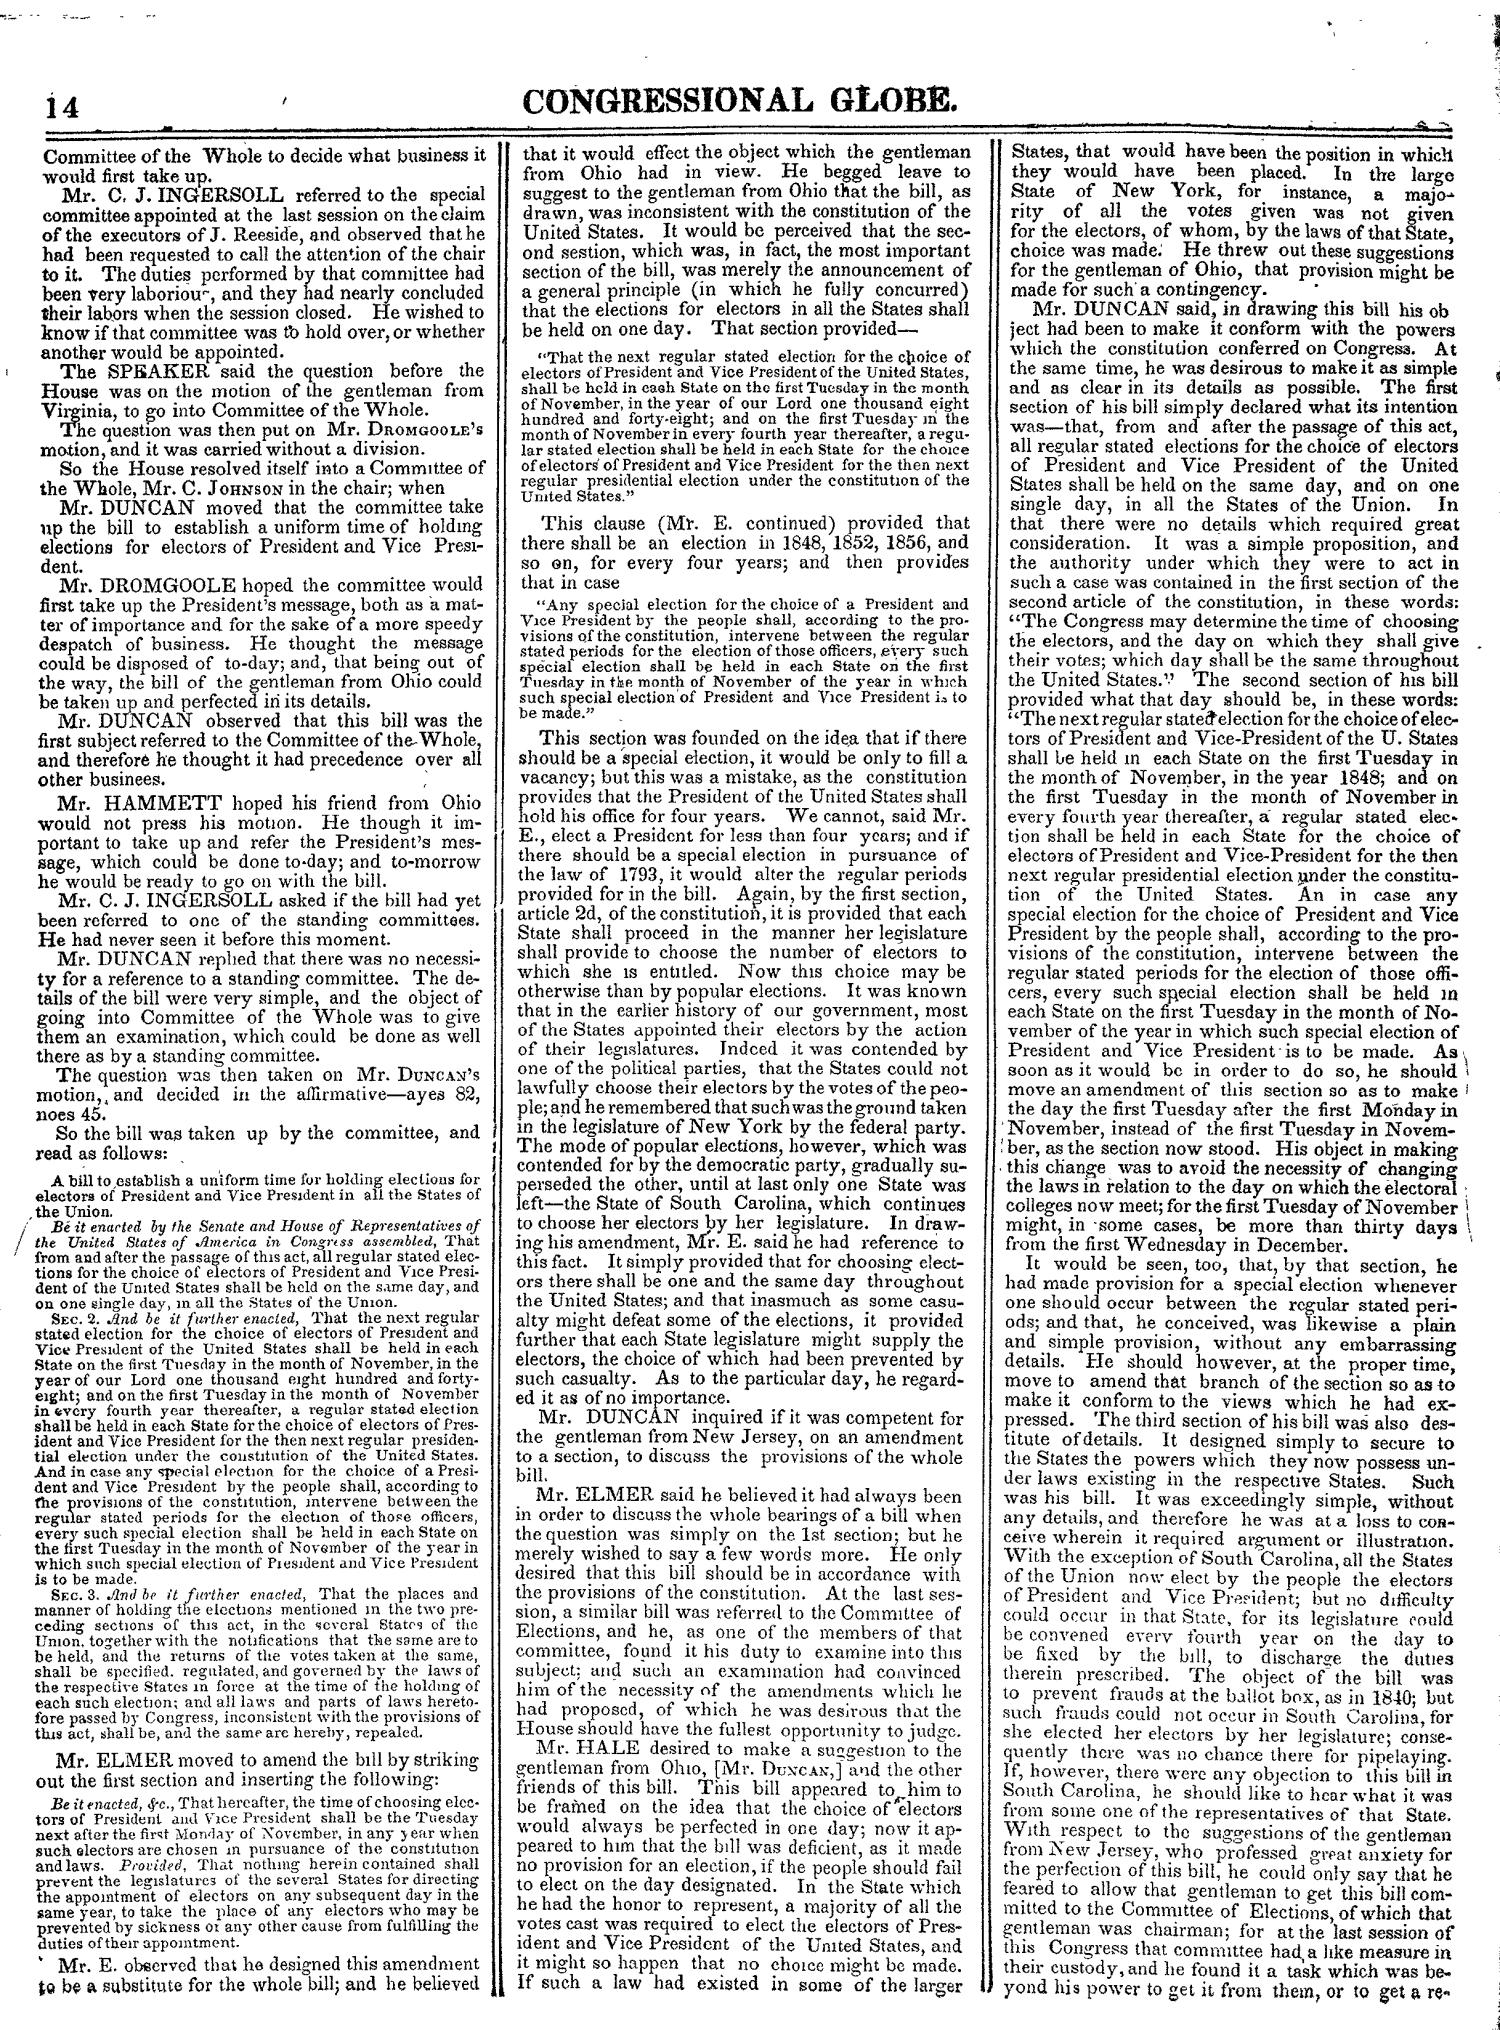 The Congressional Globe, Volume 14: Twenty-Eighth Congress, Second Session
                                                
                                                    14
                                                